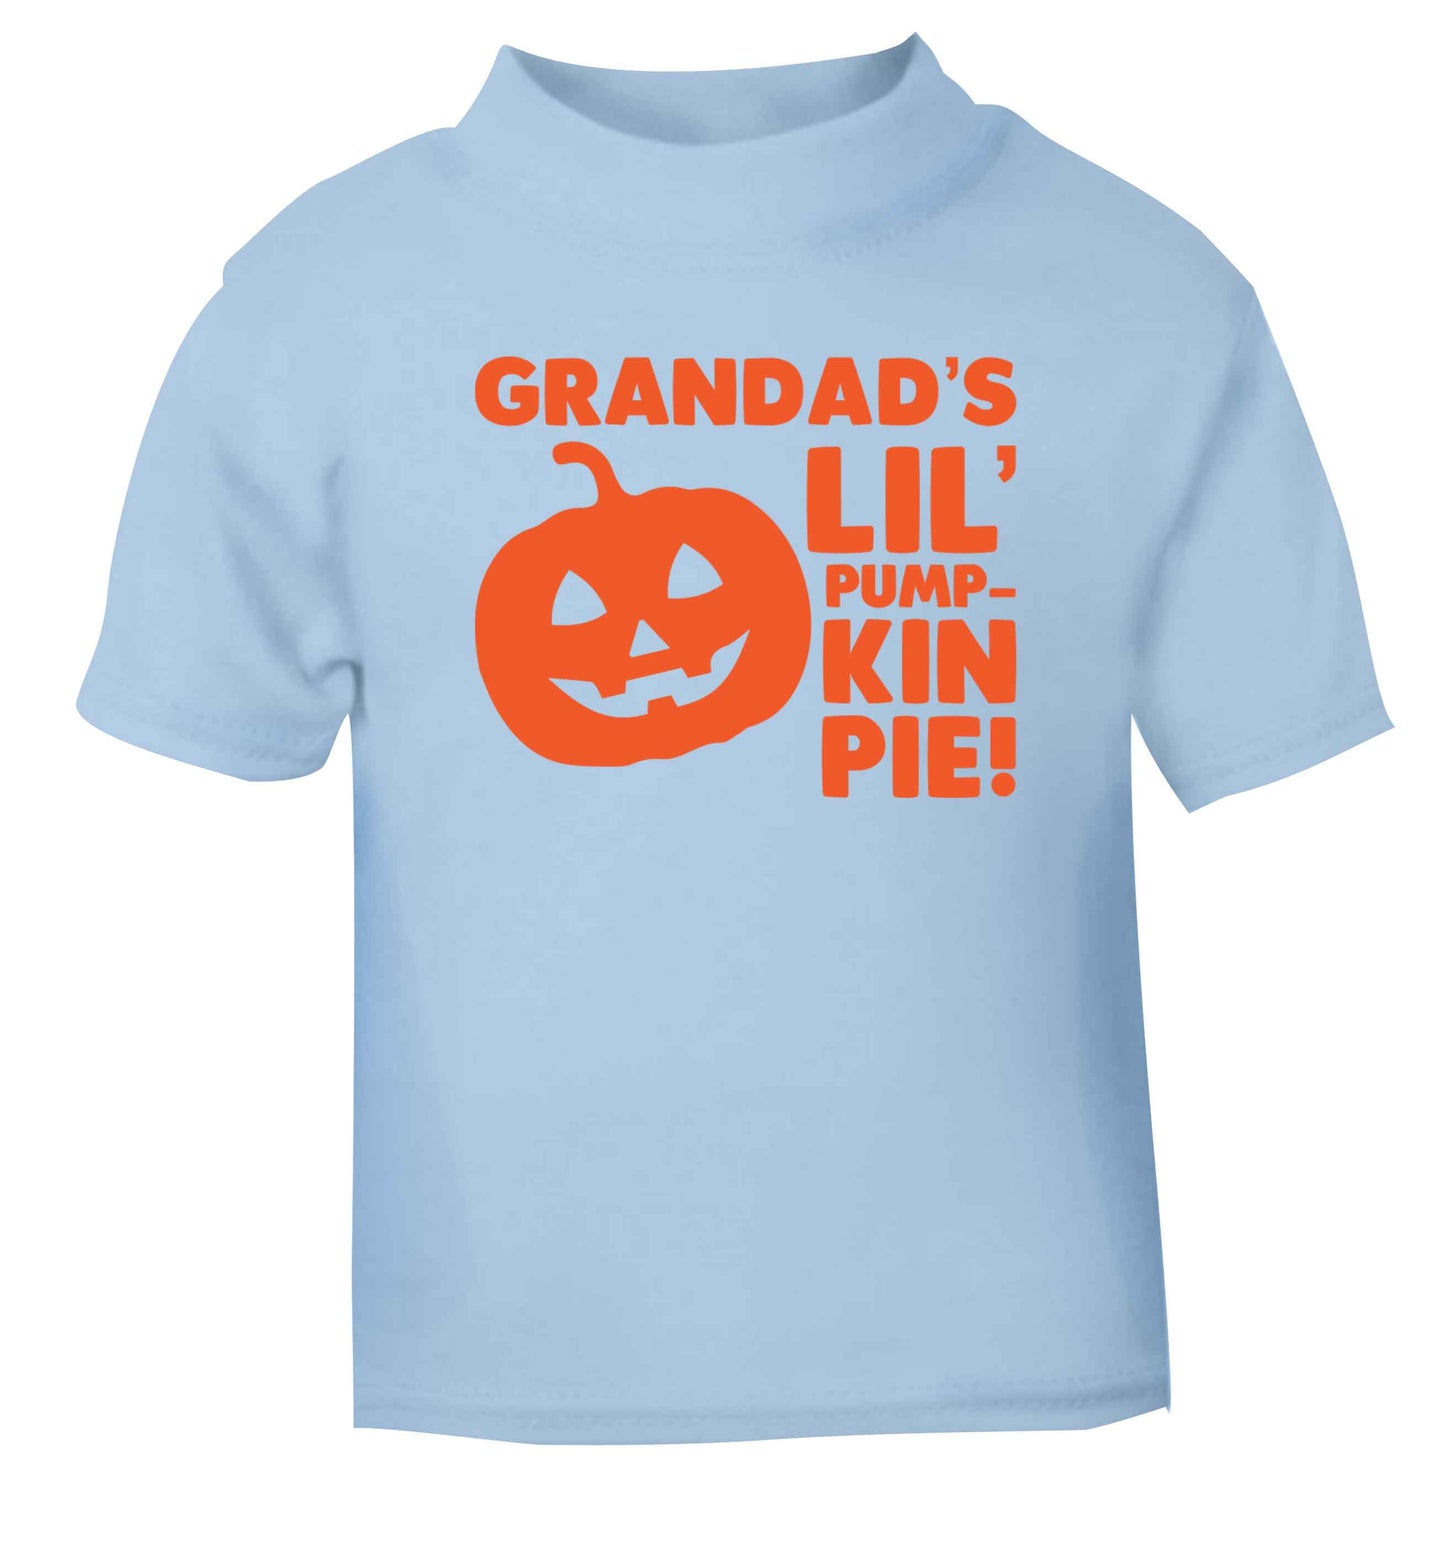 Grandad's lil' pumpkin pie light blue baby toddler Tshirt 2 Years